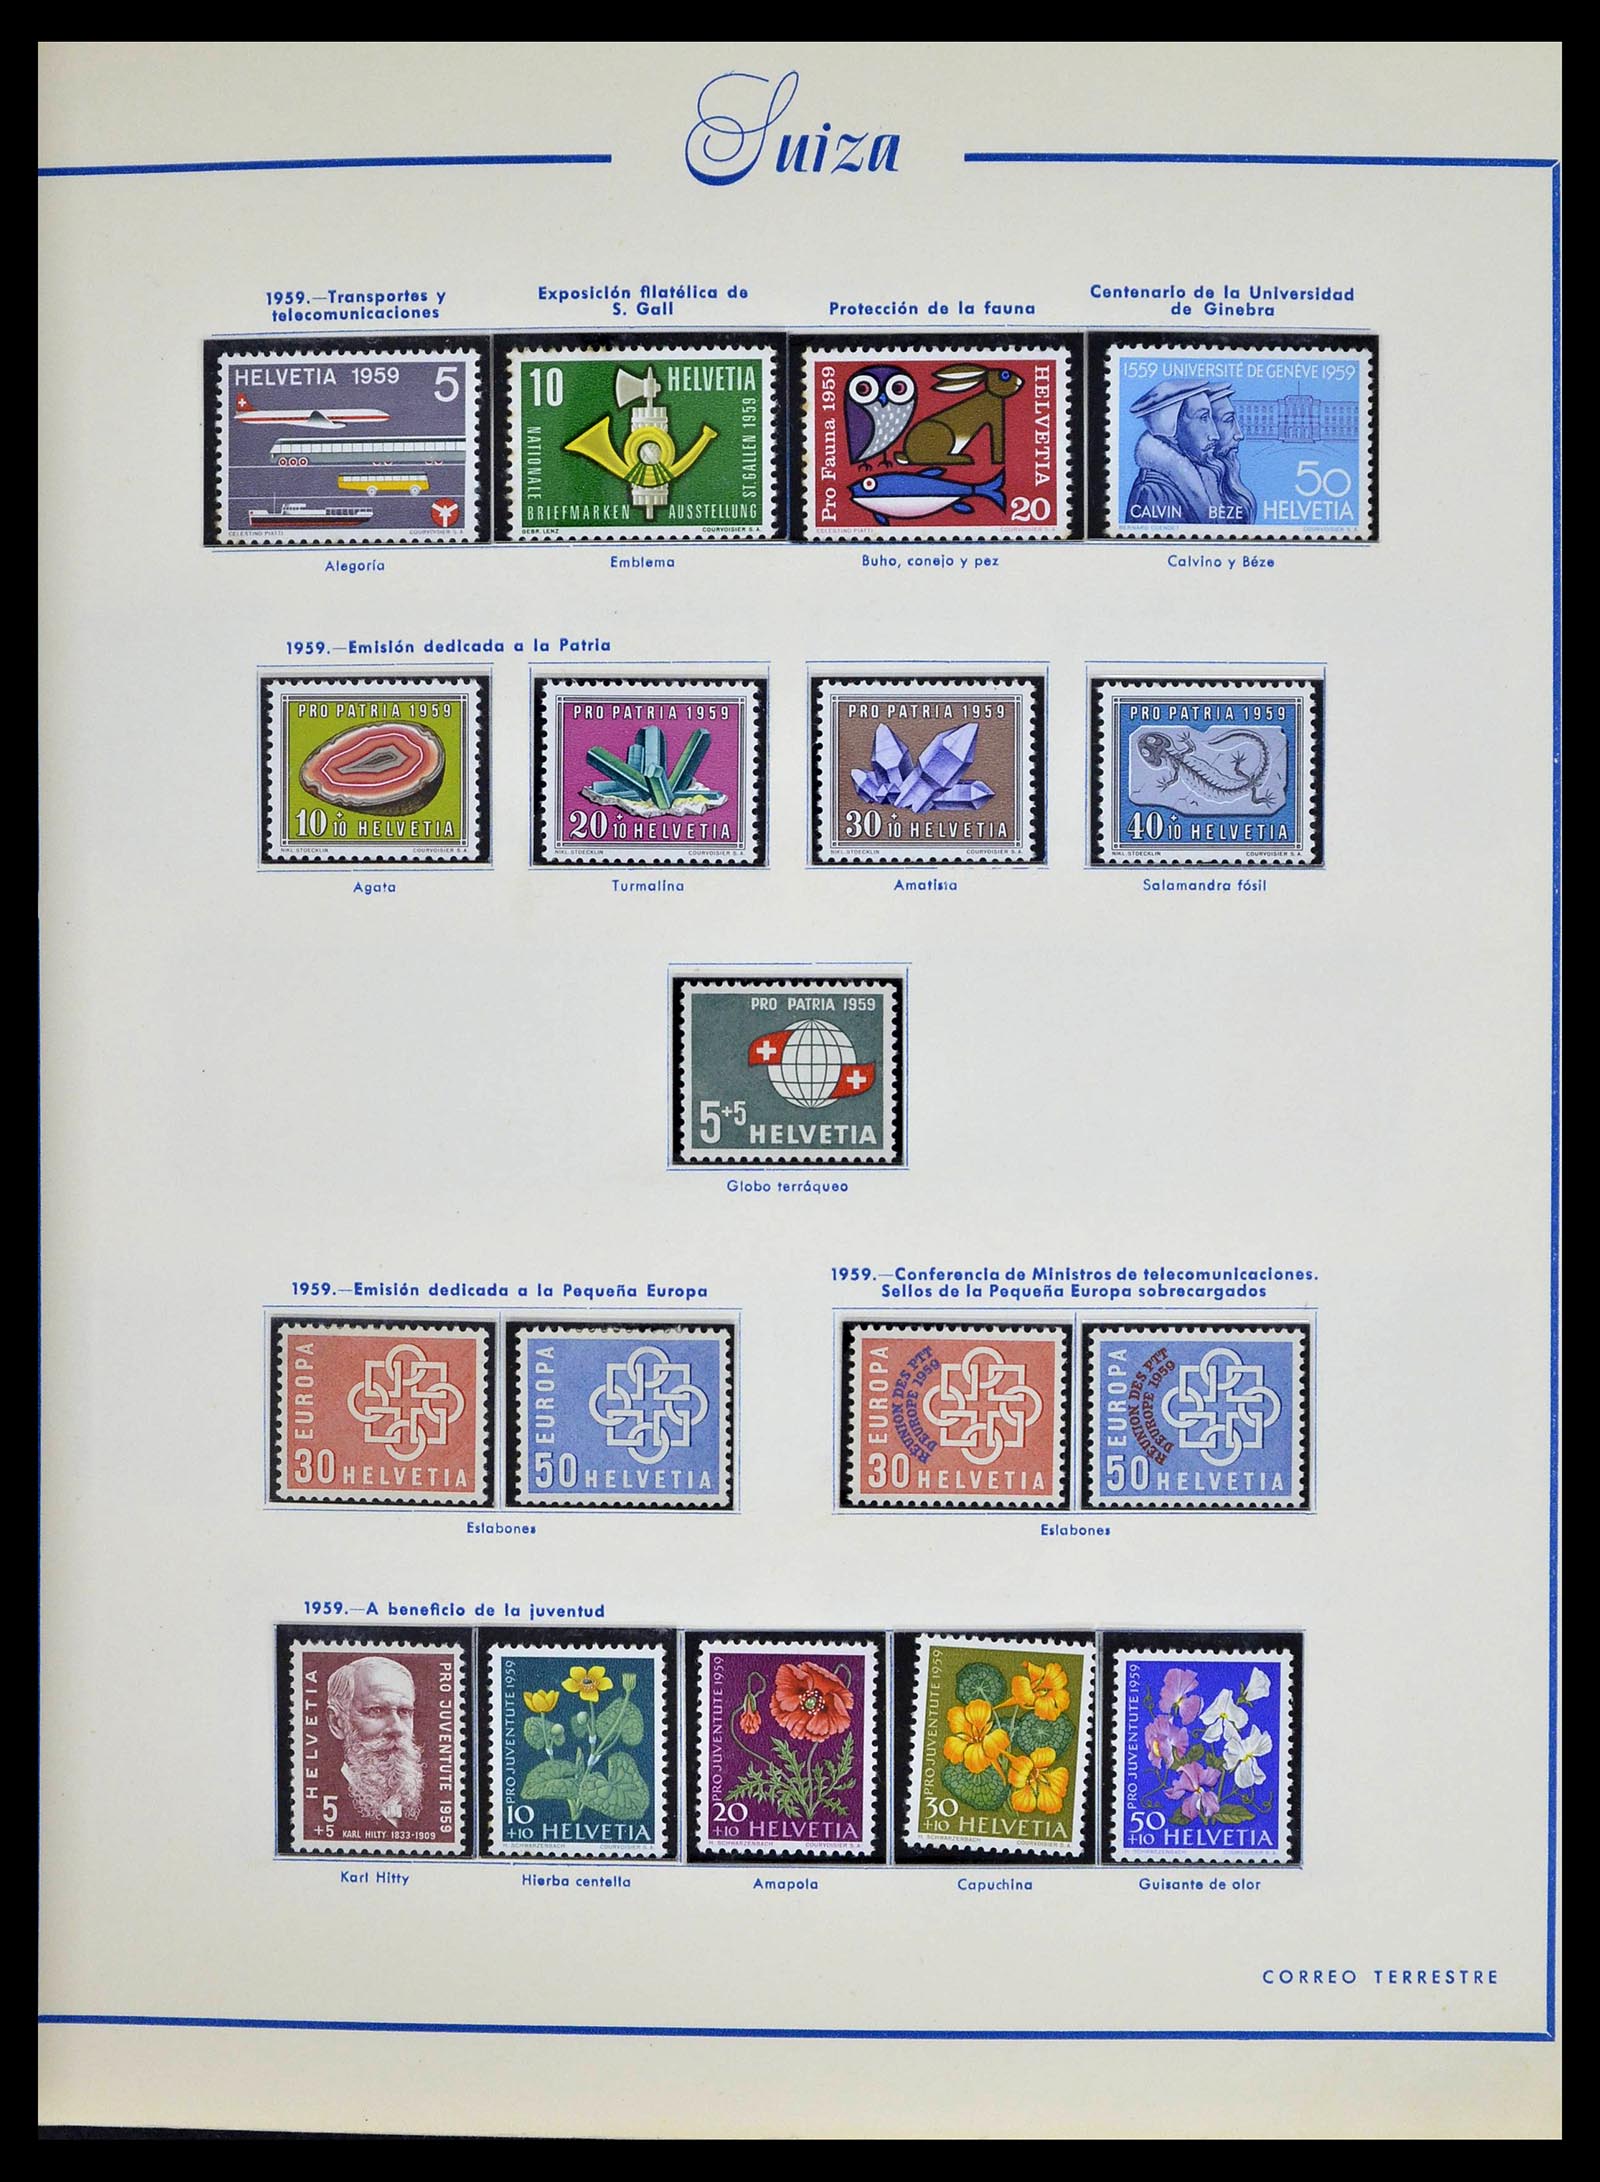 39217 0037 - Stamp collection 39217 Switzerland 1850-1986.